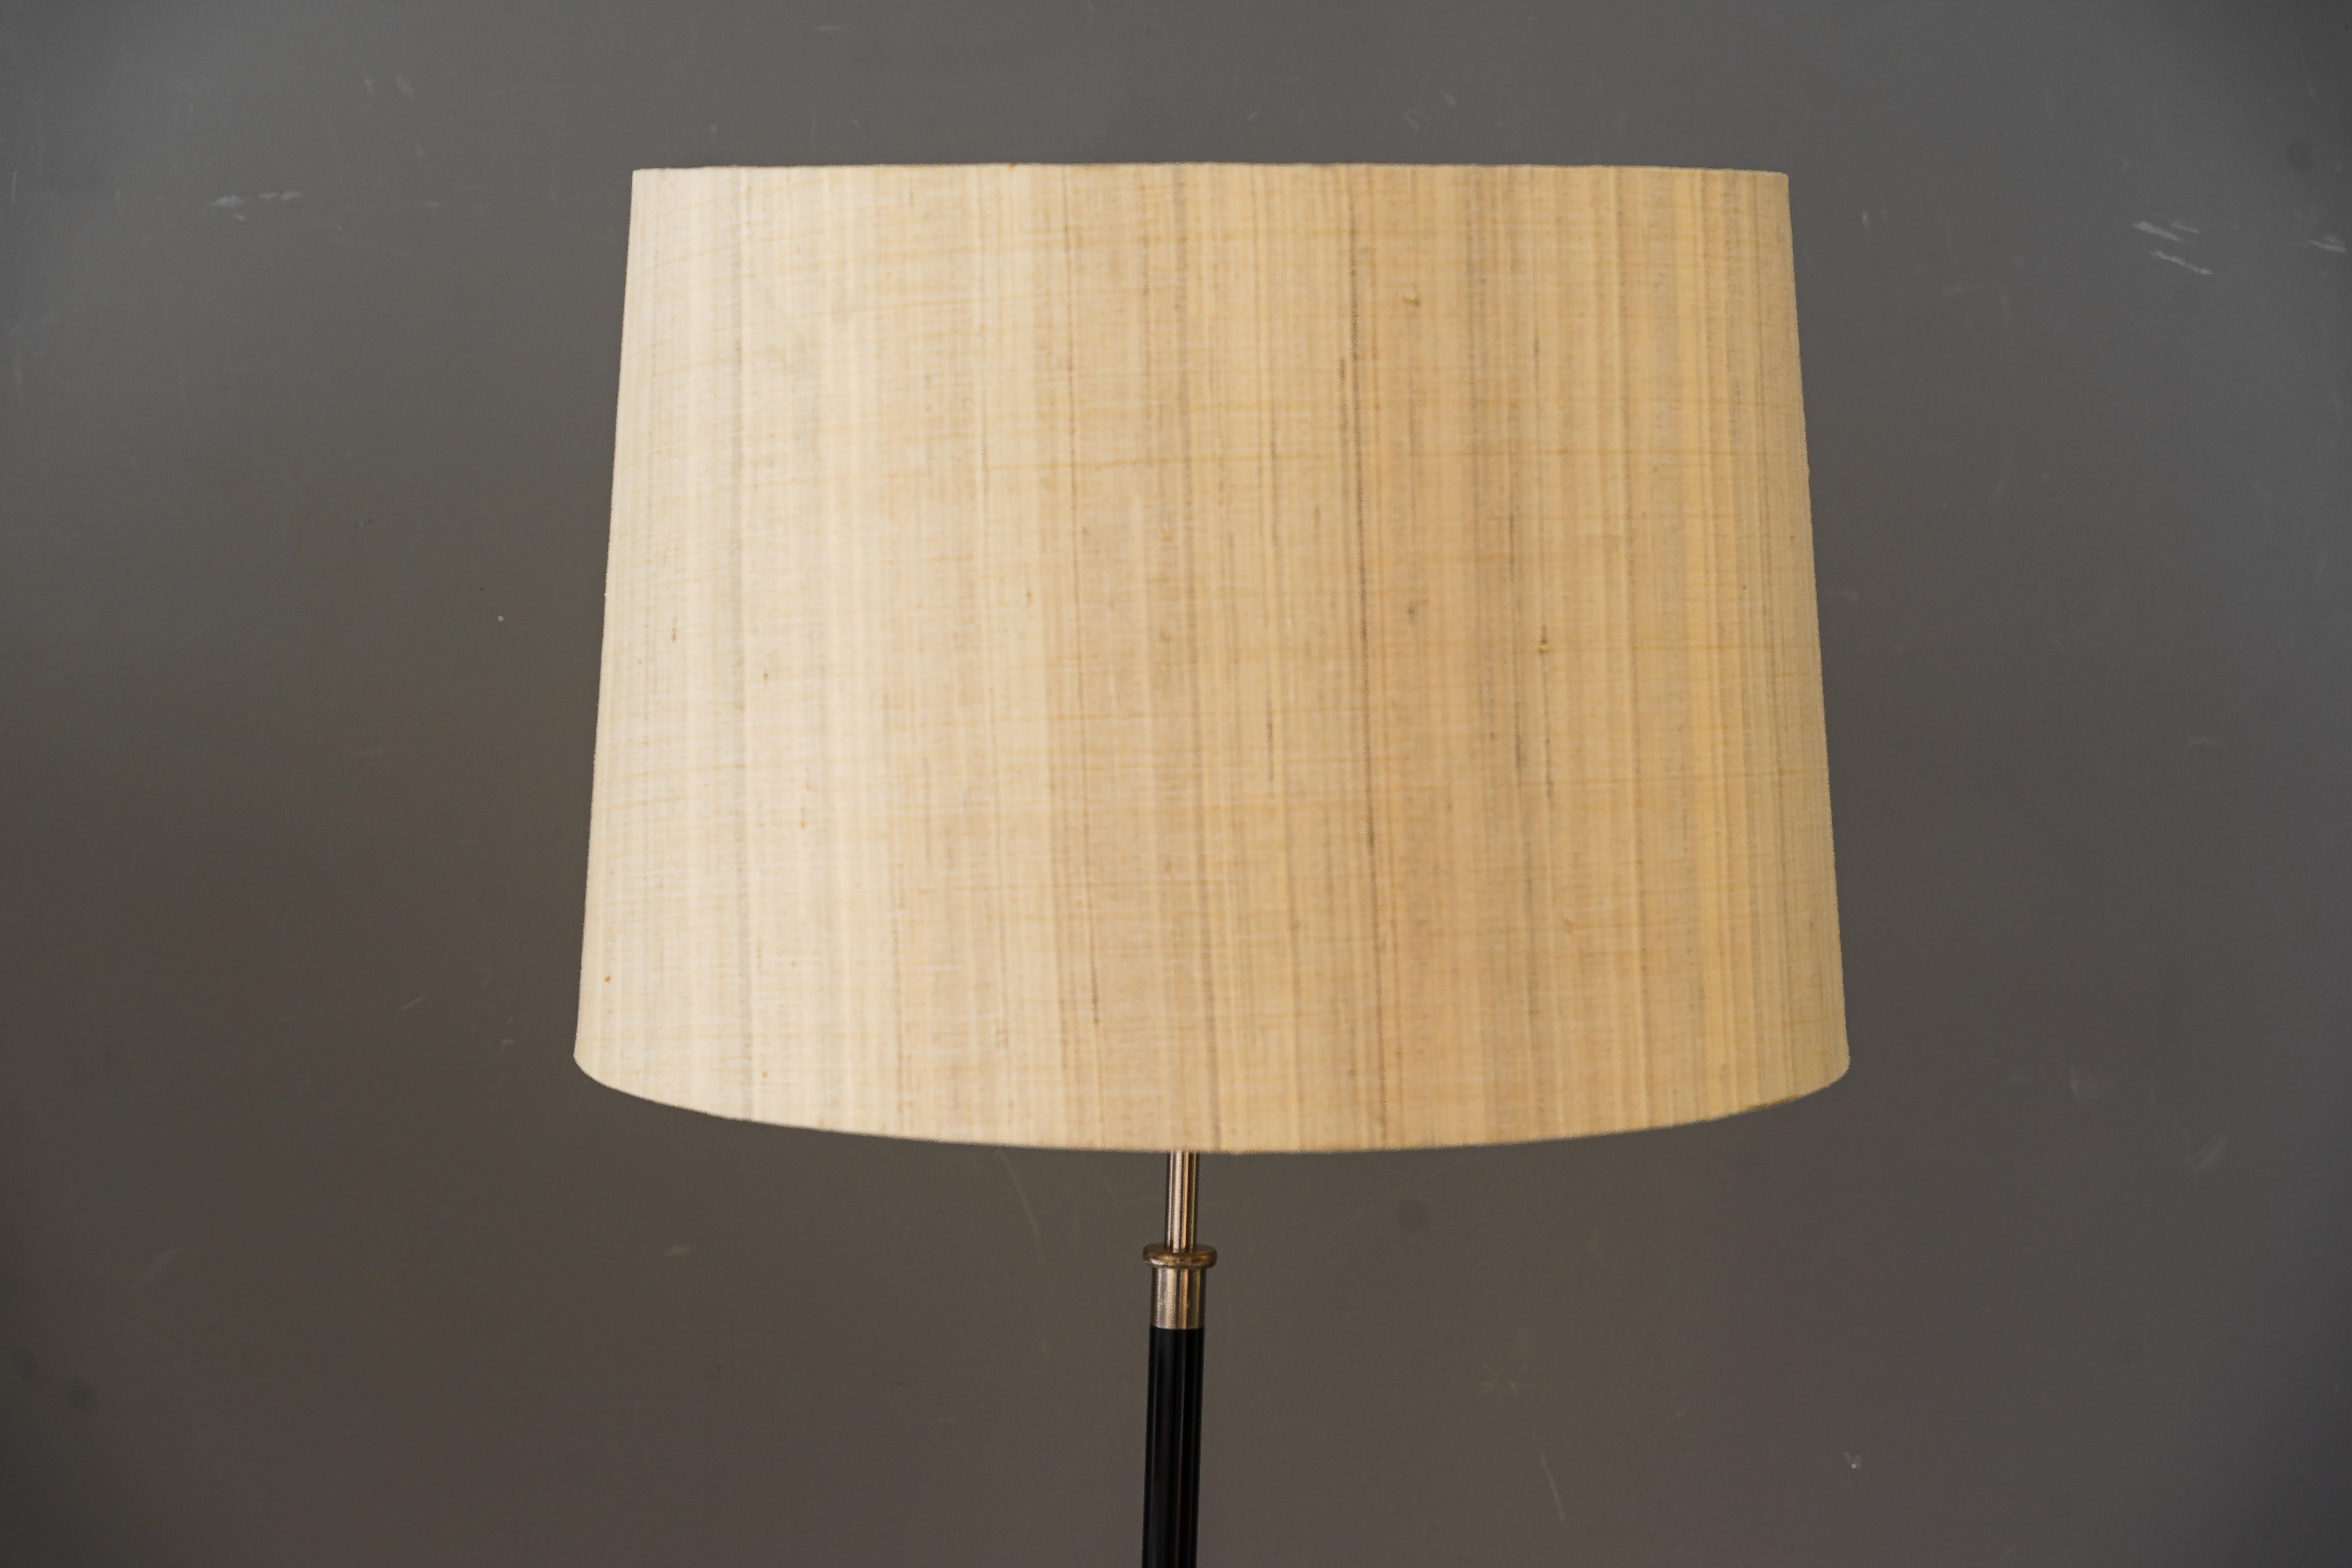 J.T.Kalmar floor lamp vienna around 1950s
Nickel - plated 
Blackened
Original condition
Adjustable from 154cm up to 180cm.